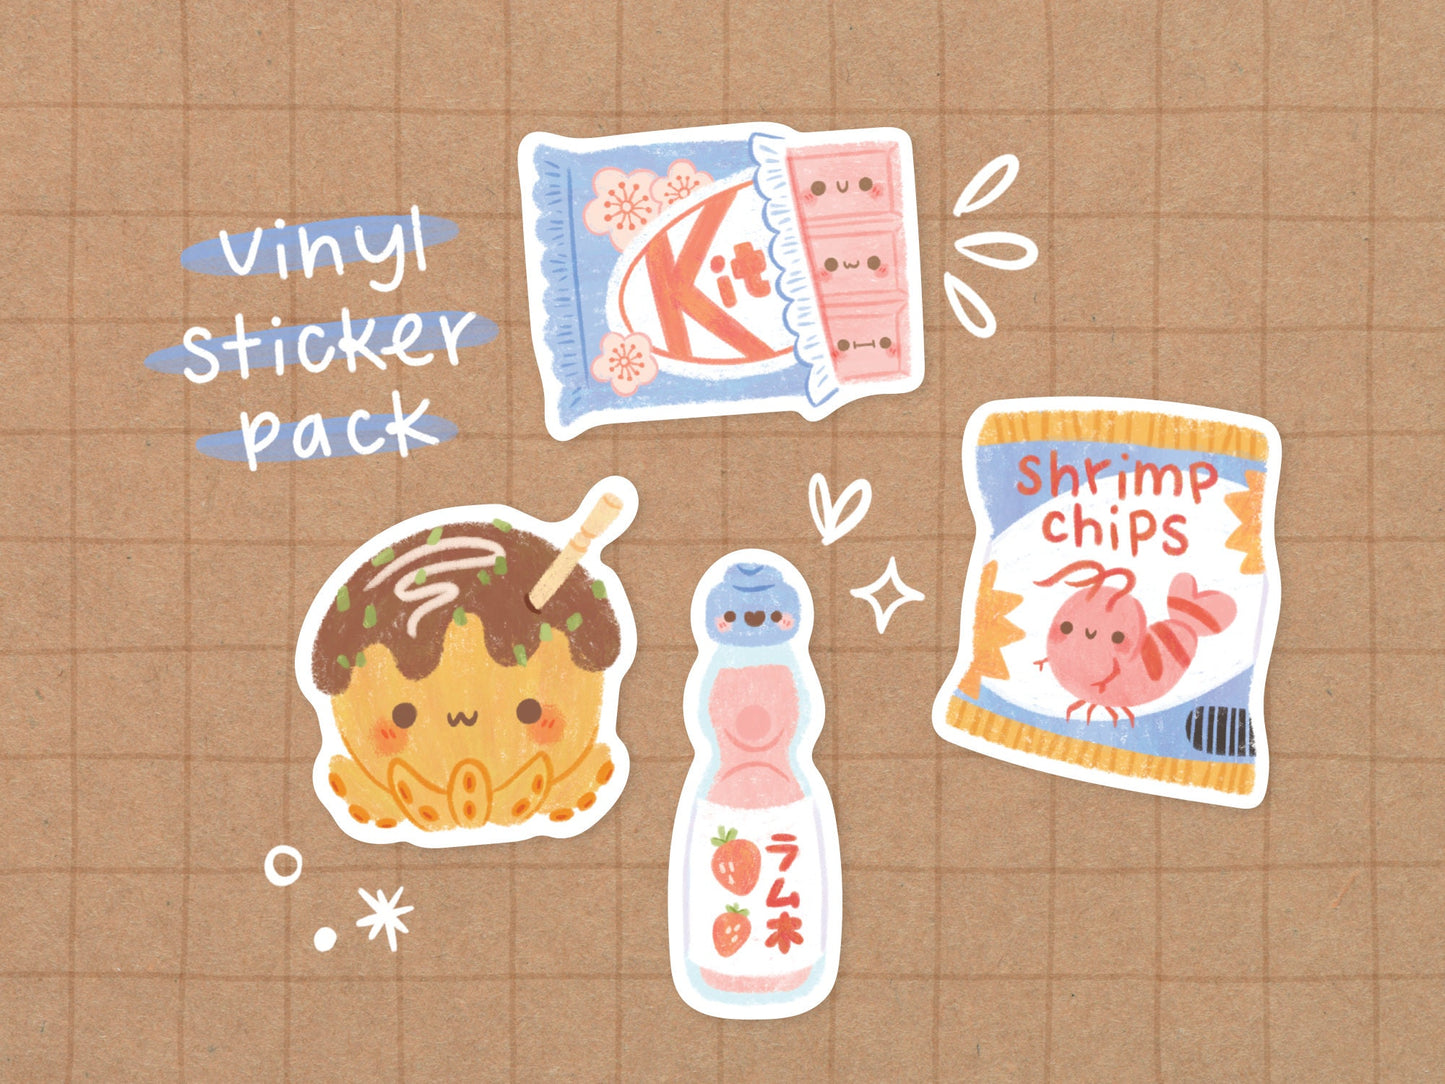 Asian Snacks Vinyl Sticker Pack A